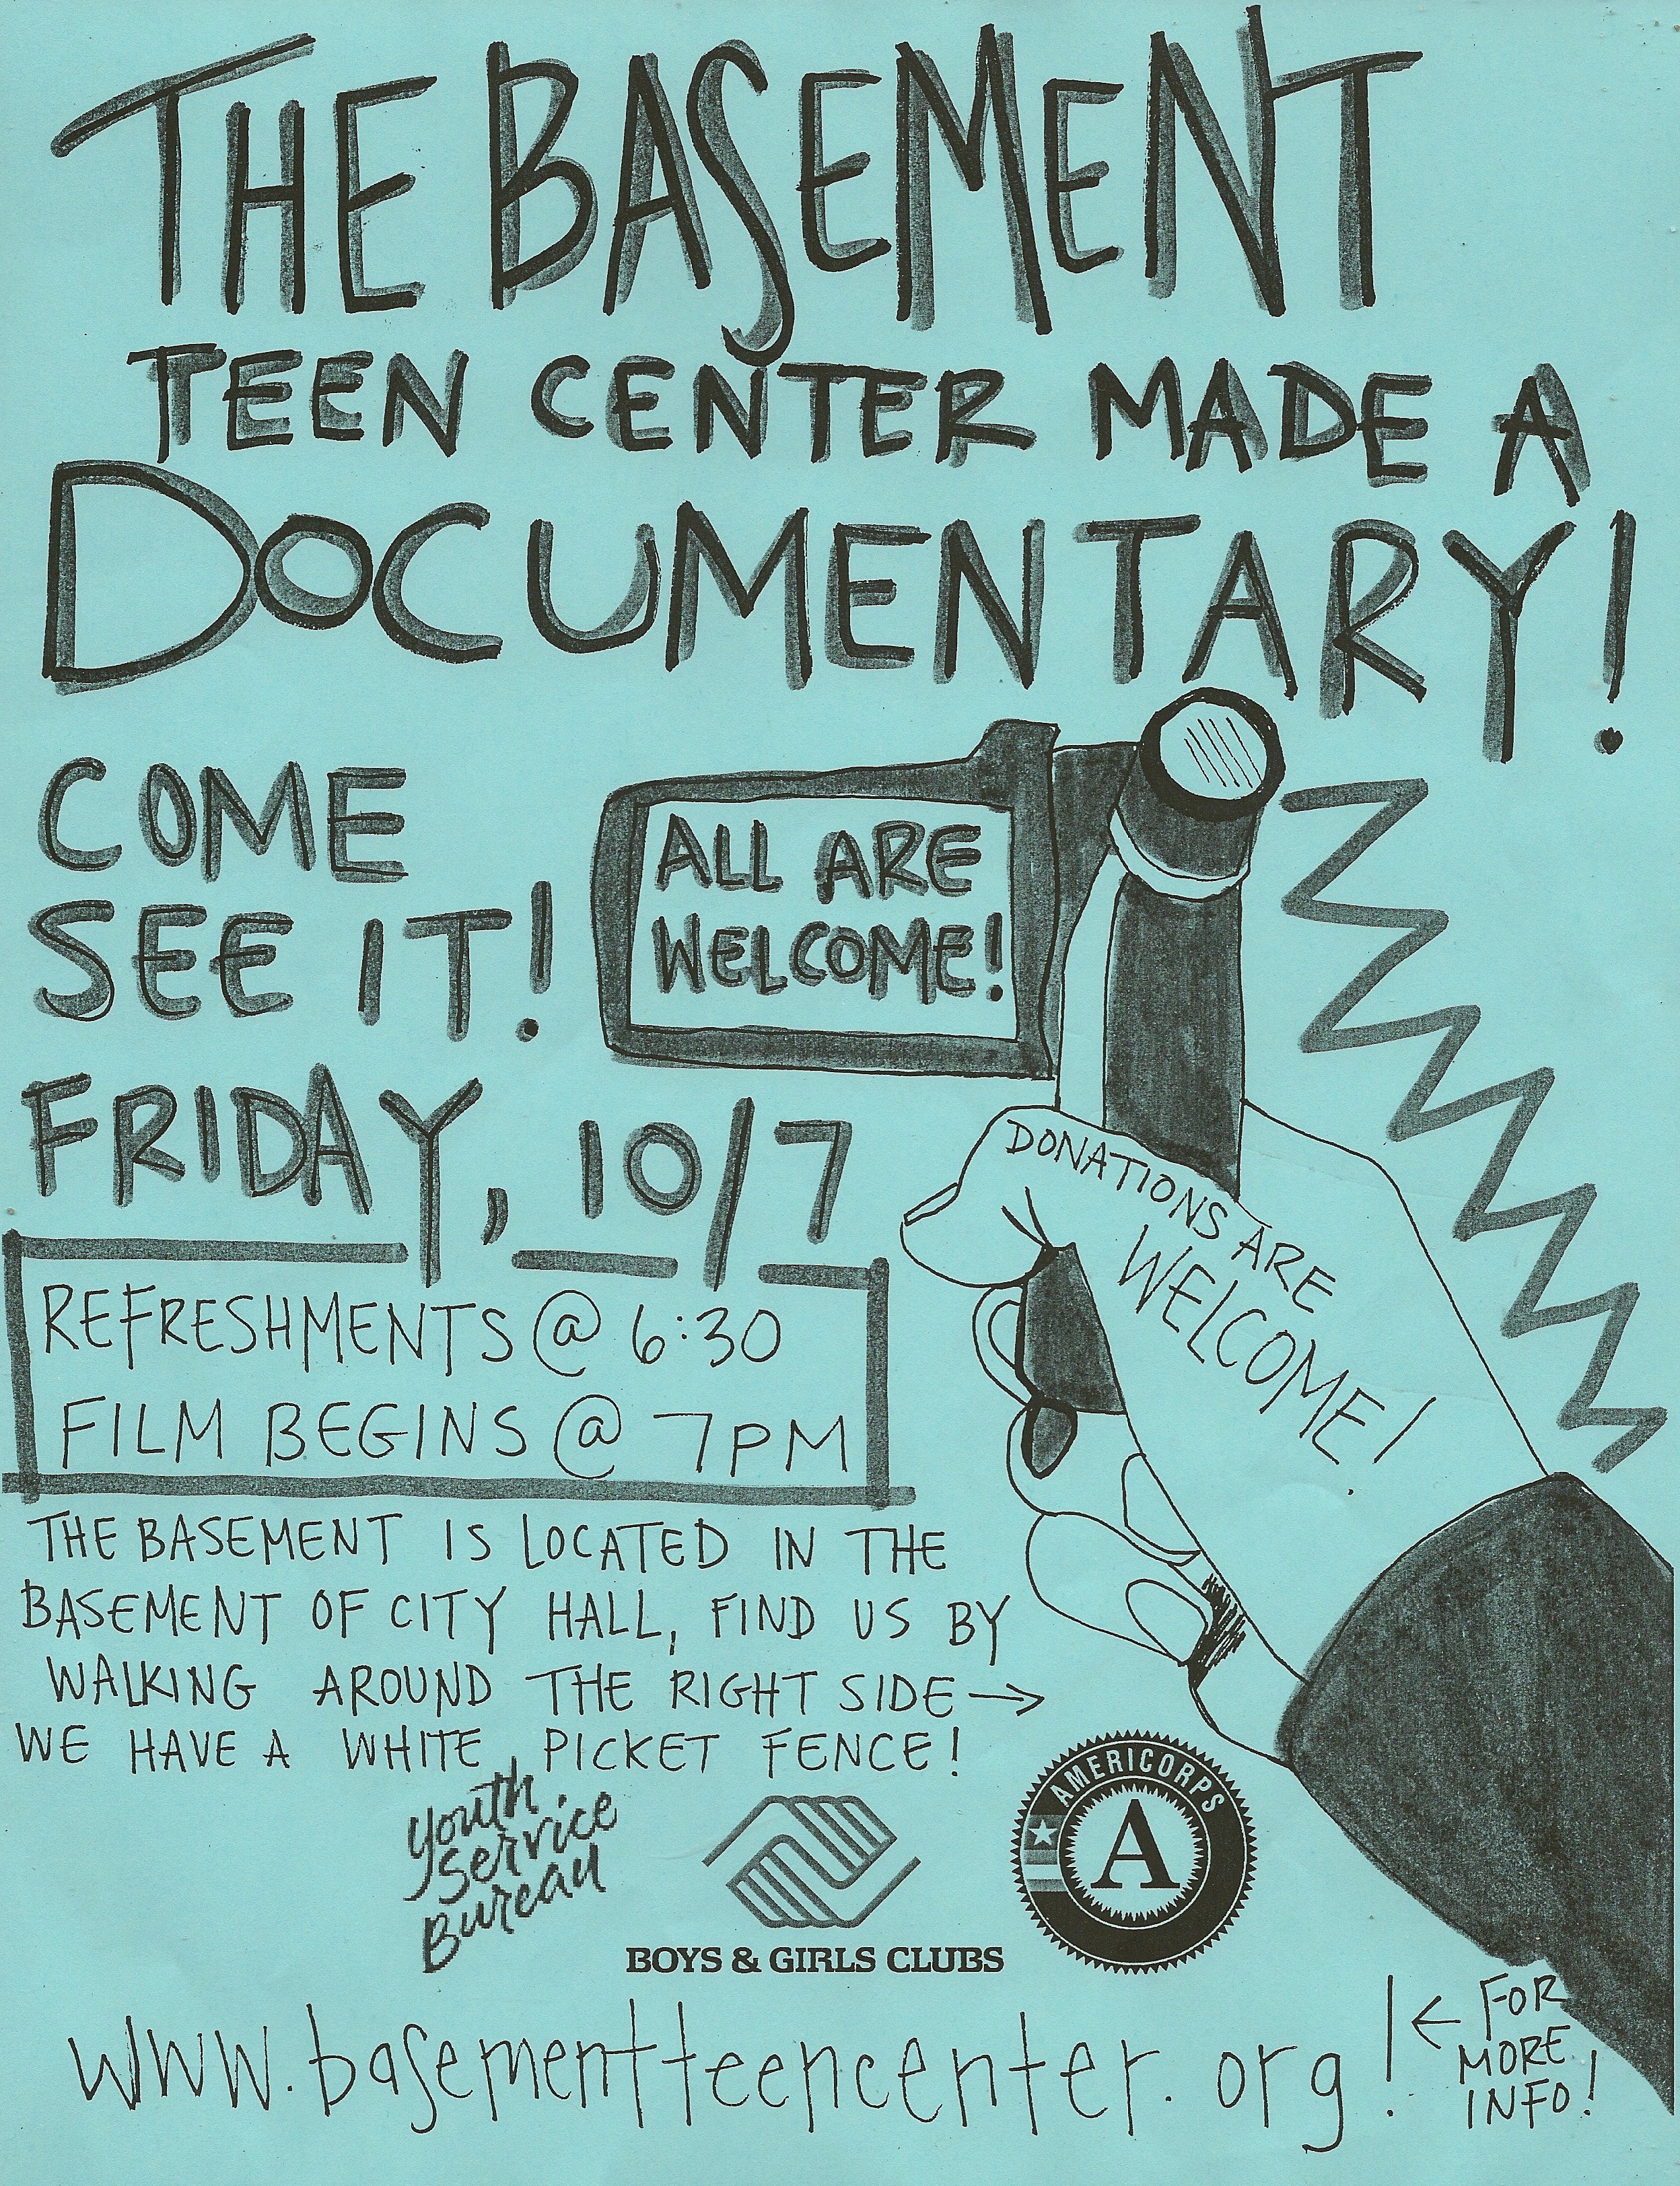 Friday The Teen Center 37